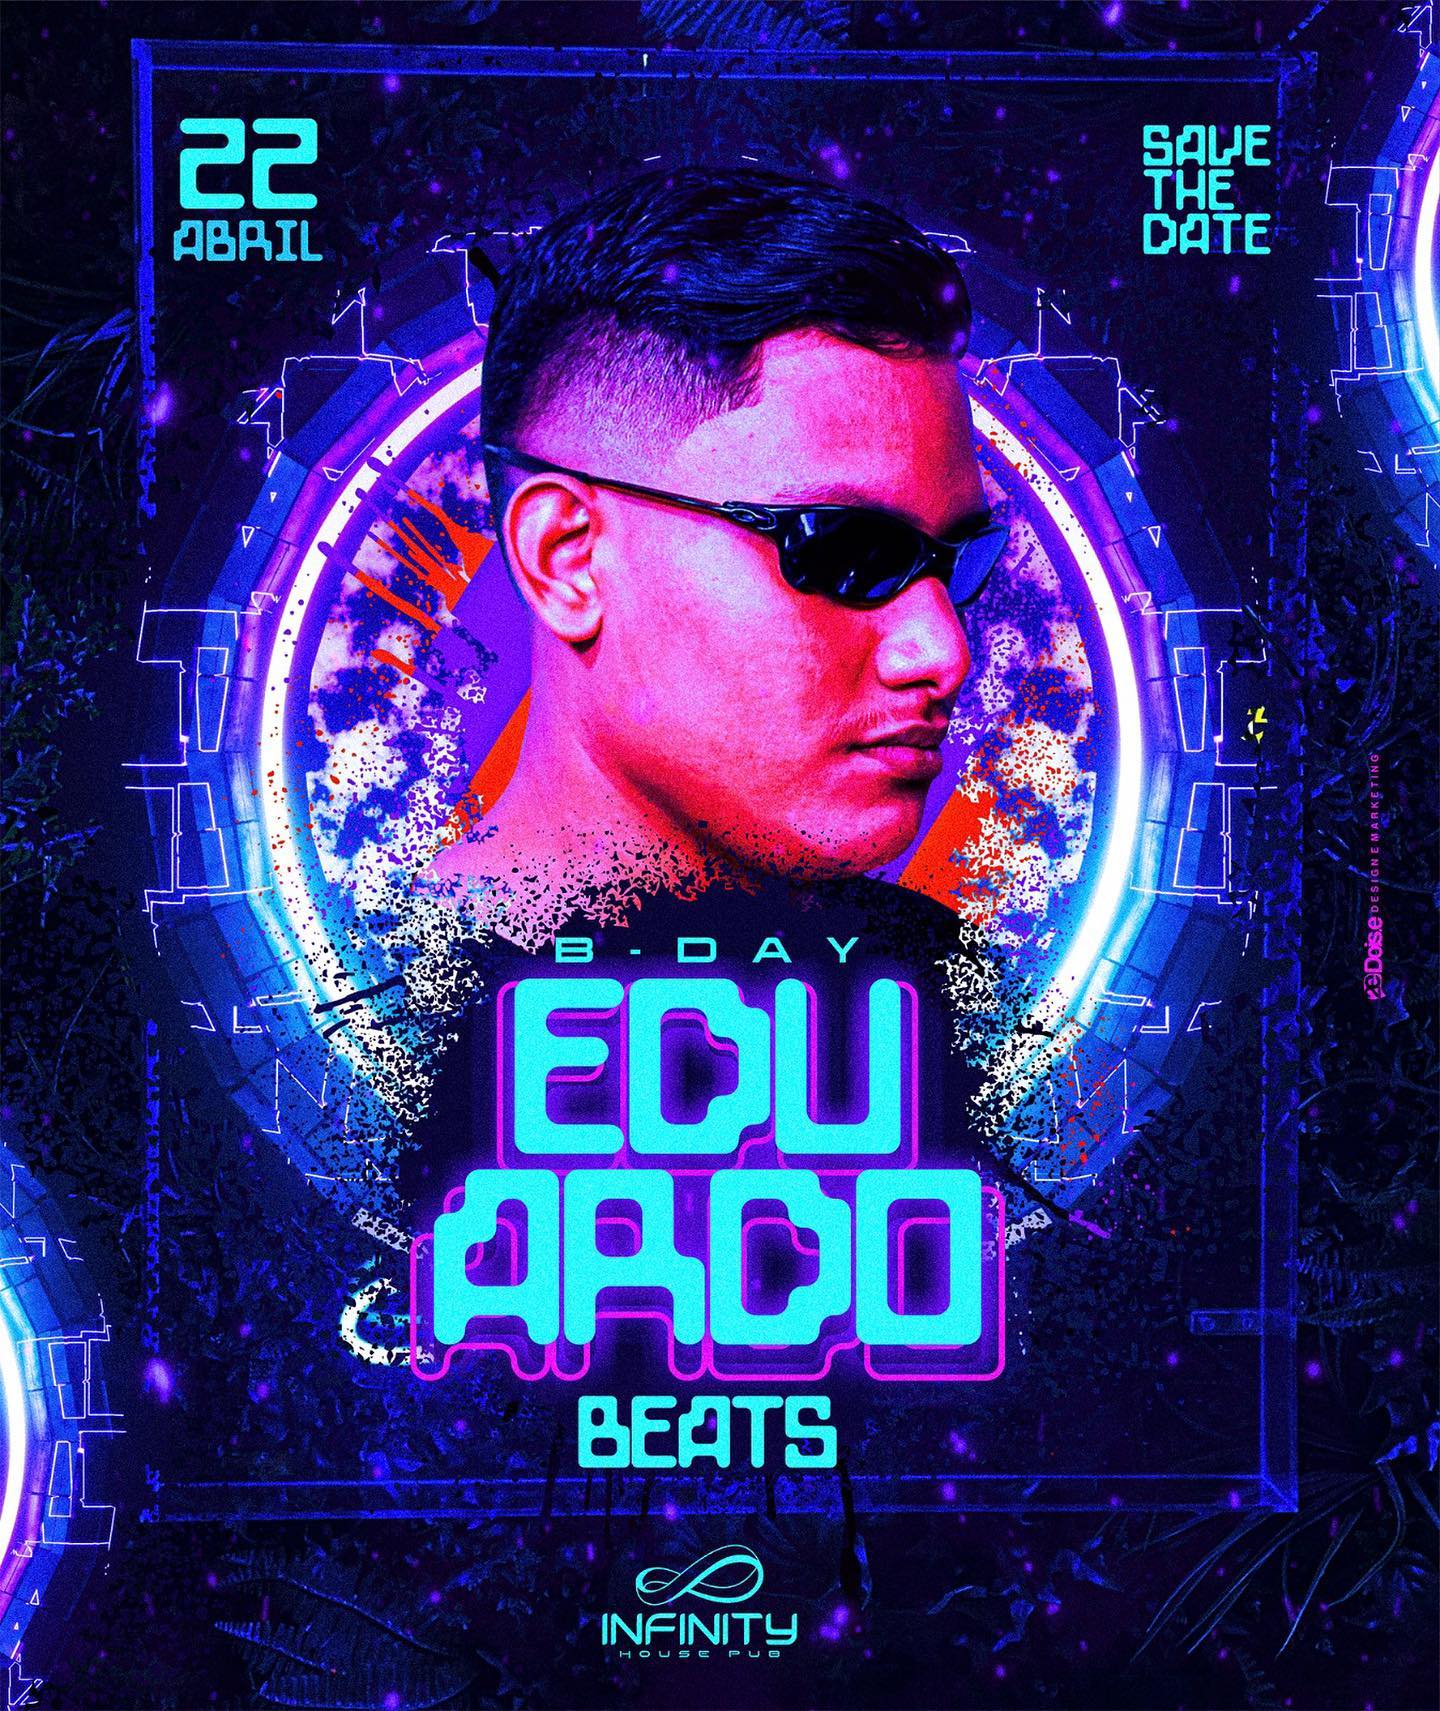 BDAY DJ EDUARDO BEATS